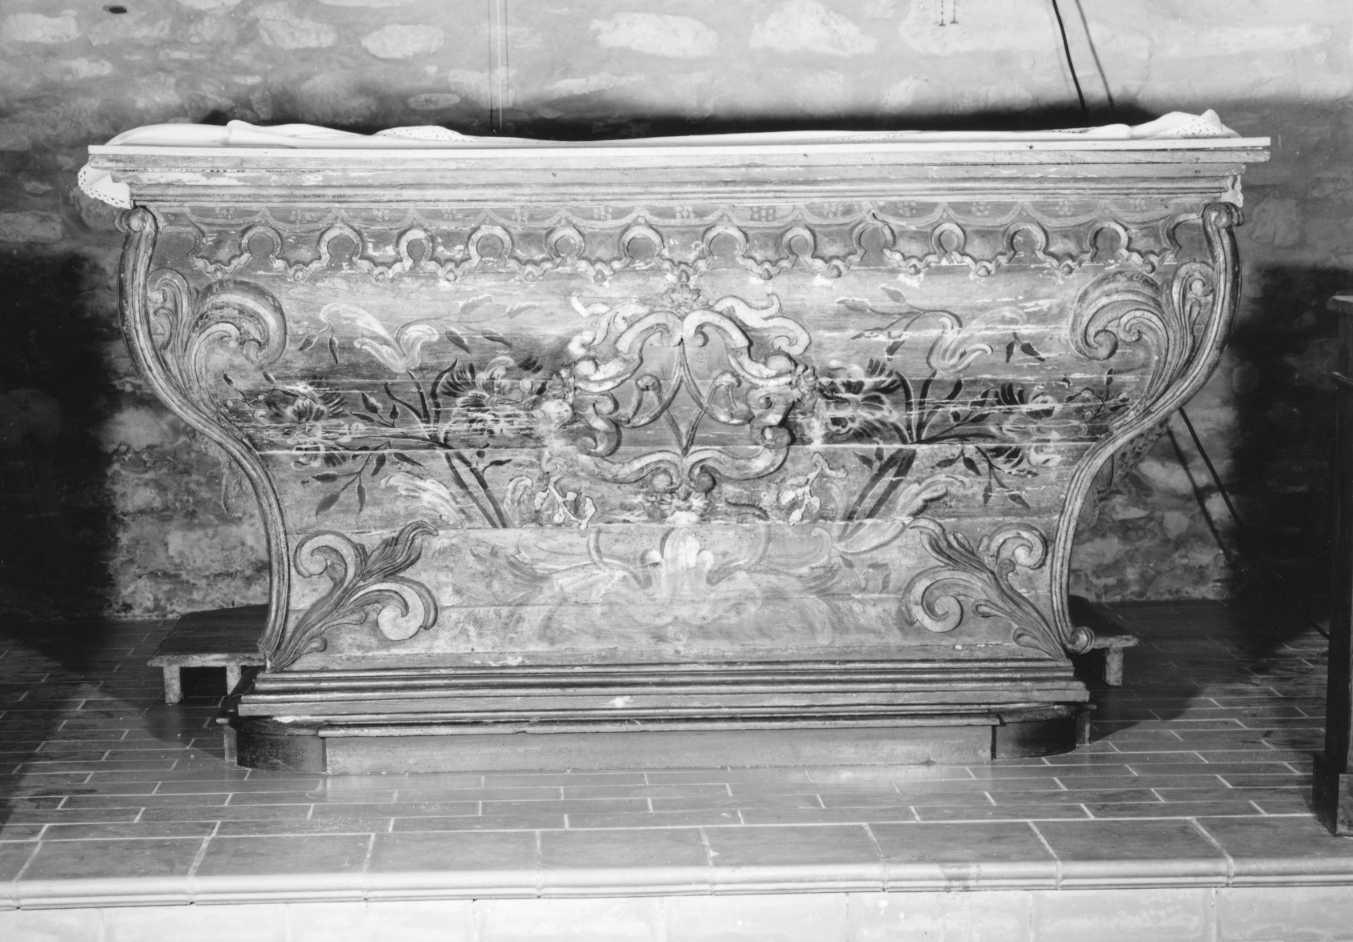 motivi decorativi vegetali a volute (altare) - manifattura tosco-romagnola (metà sec. XVII)